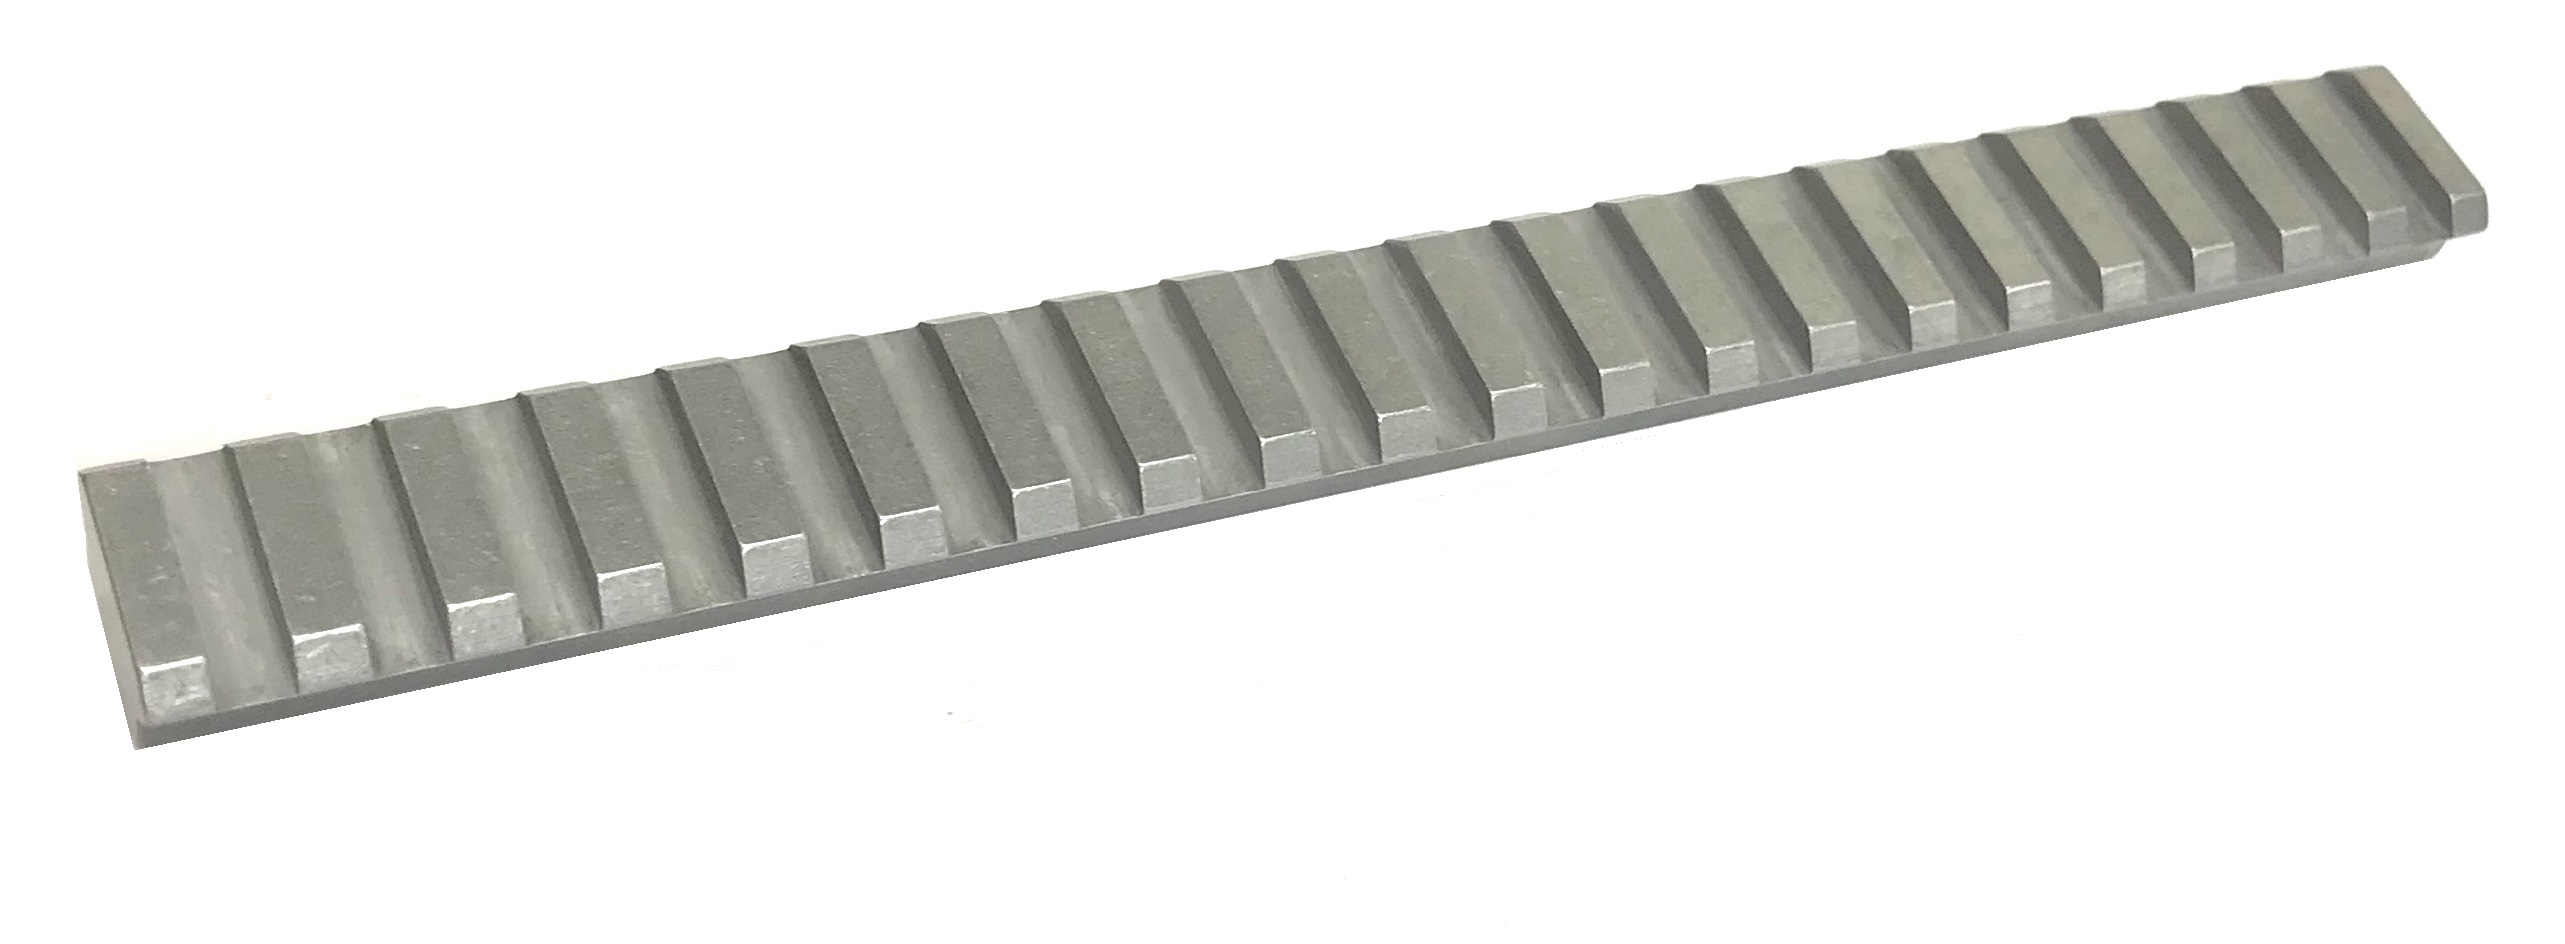 Picatinny Rail - Blank Steel - R-57050-0120